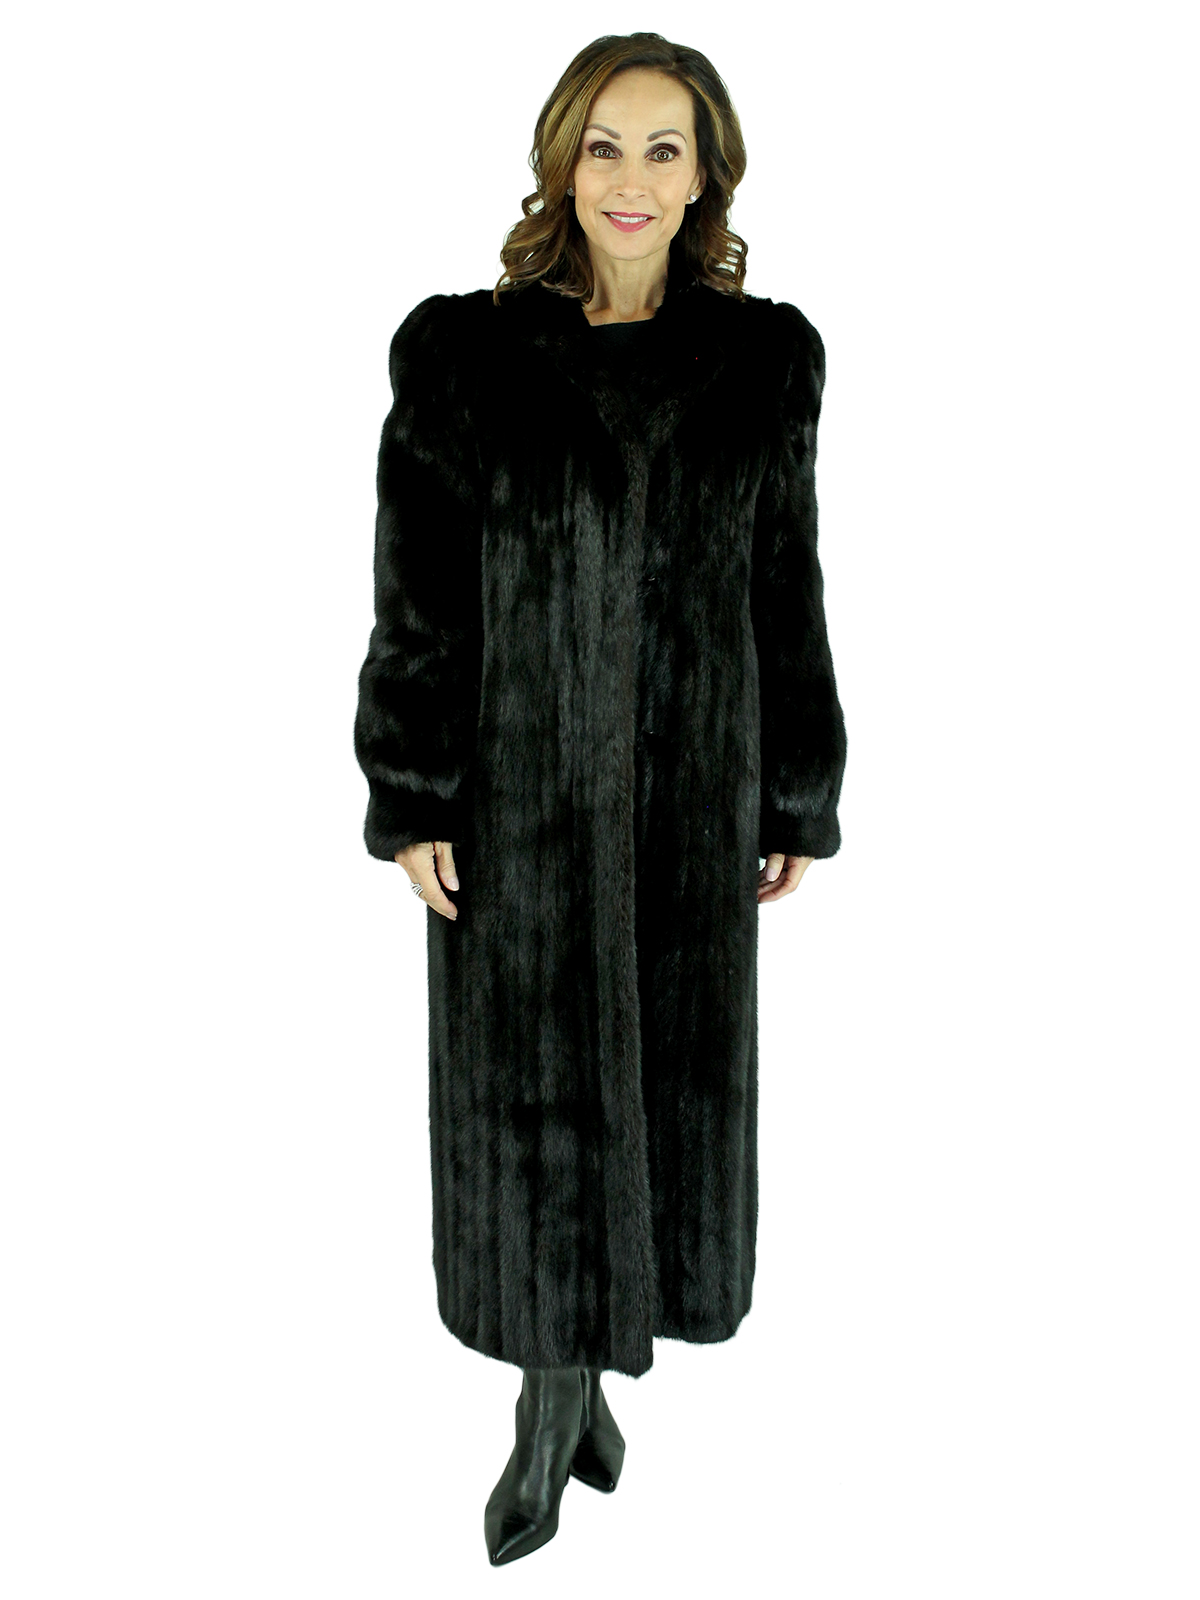 Ranch Female Mink Fur Coat - Women's Vintage Fur Coat - Small| Estate Furs